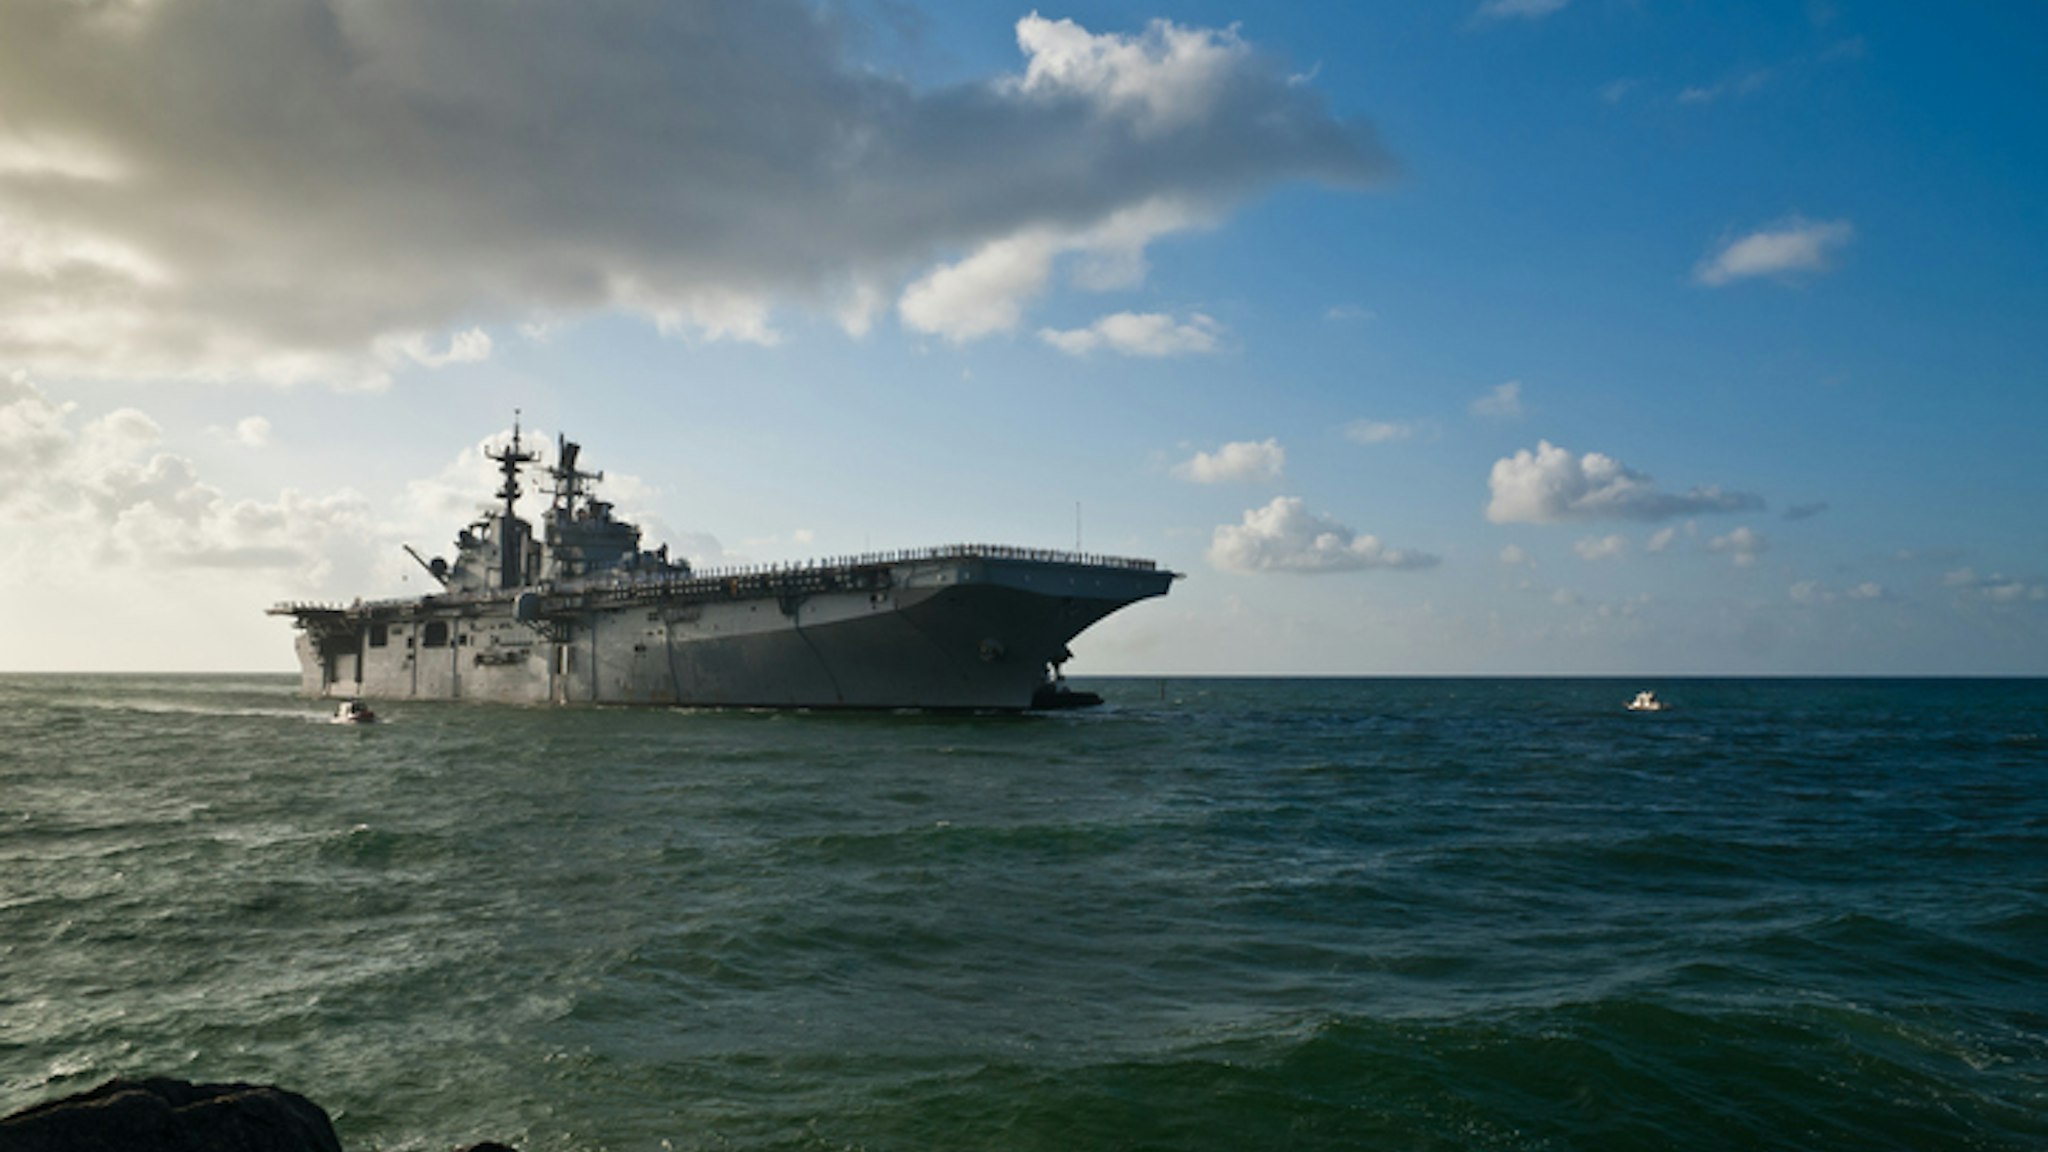 Morning sun illuminates the USS Iwo Jima (LHD-7) as she sails into Port Everglades in Fort Lauderdale, Fl..